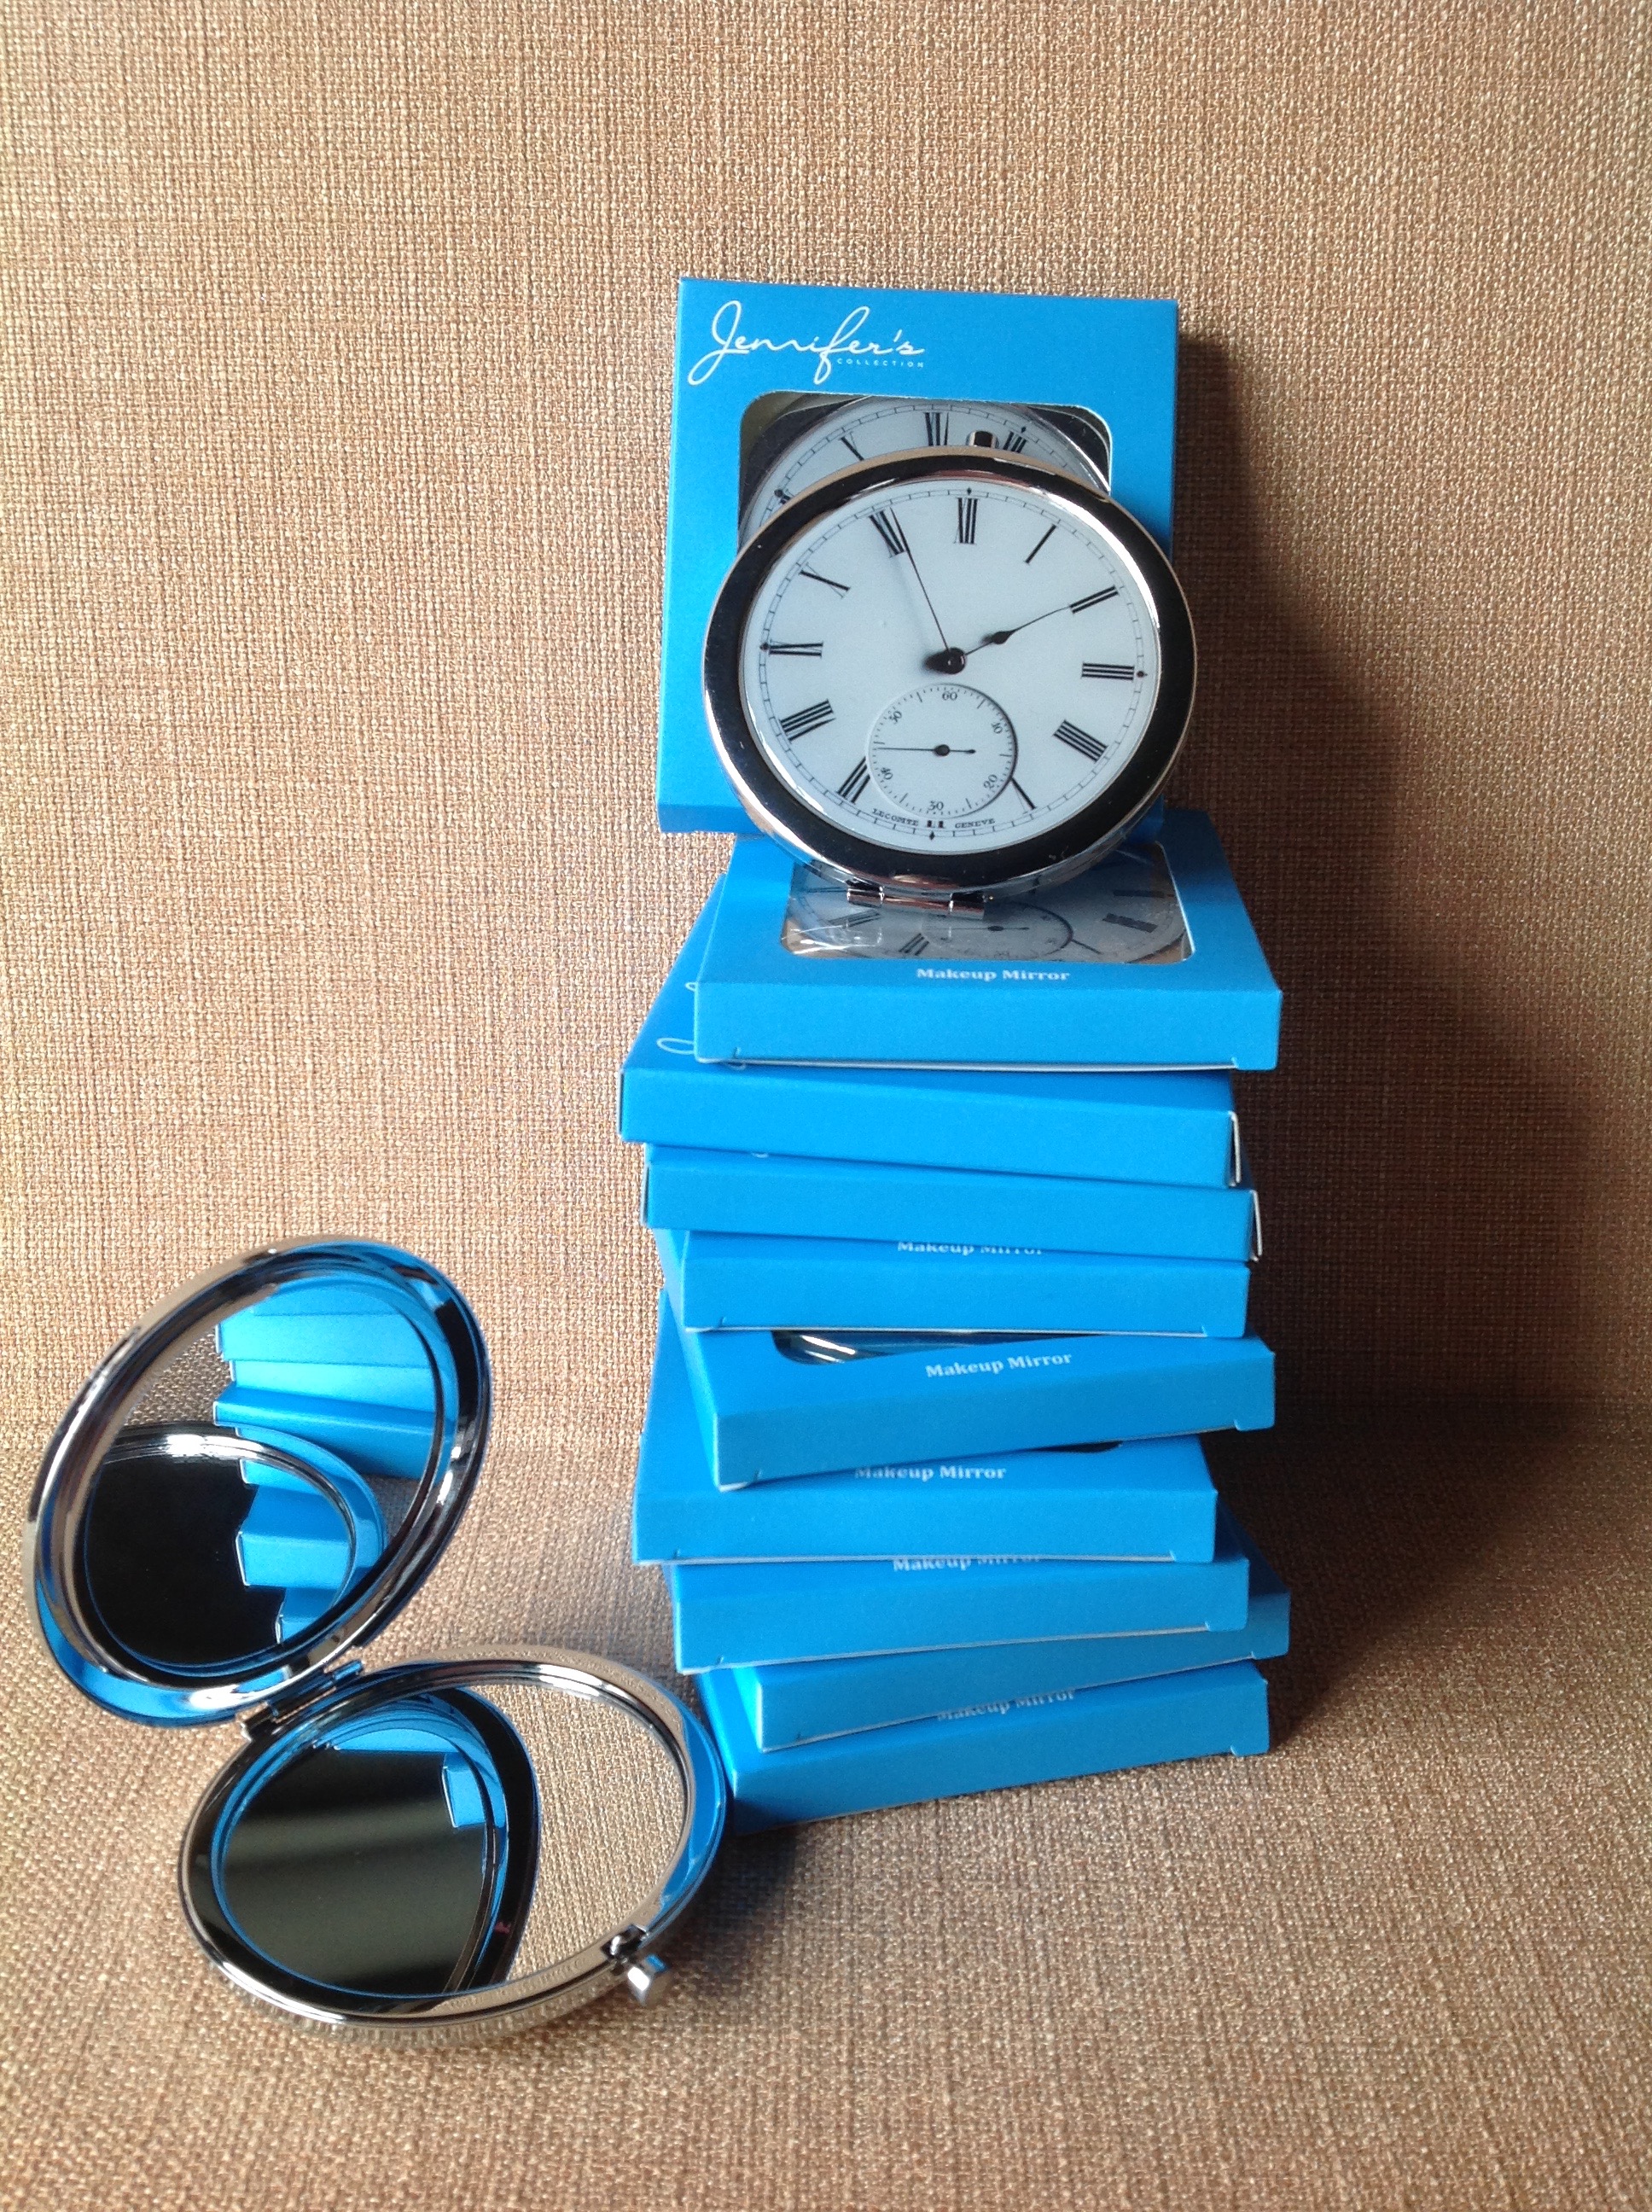 Original Design Old pocket watch compact mirror